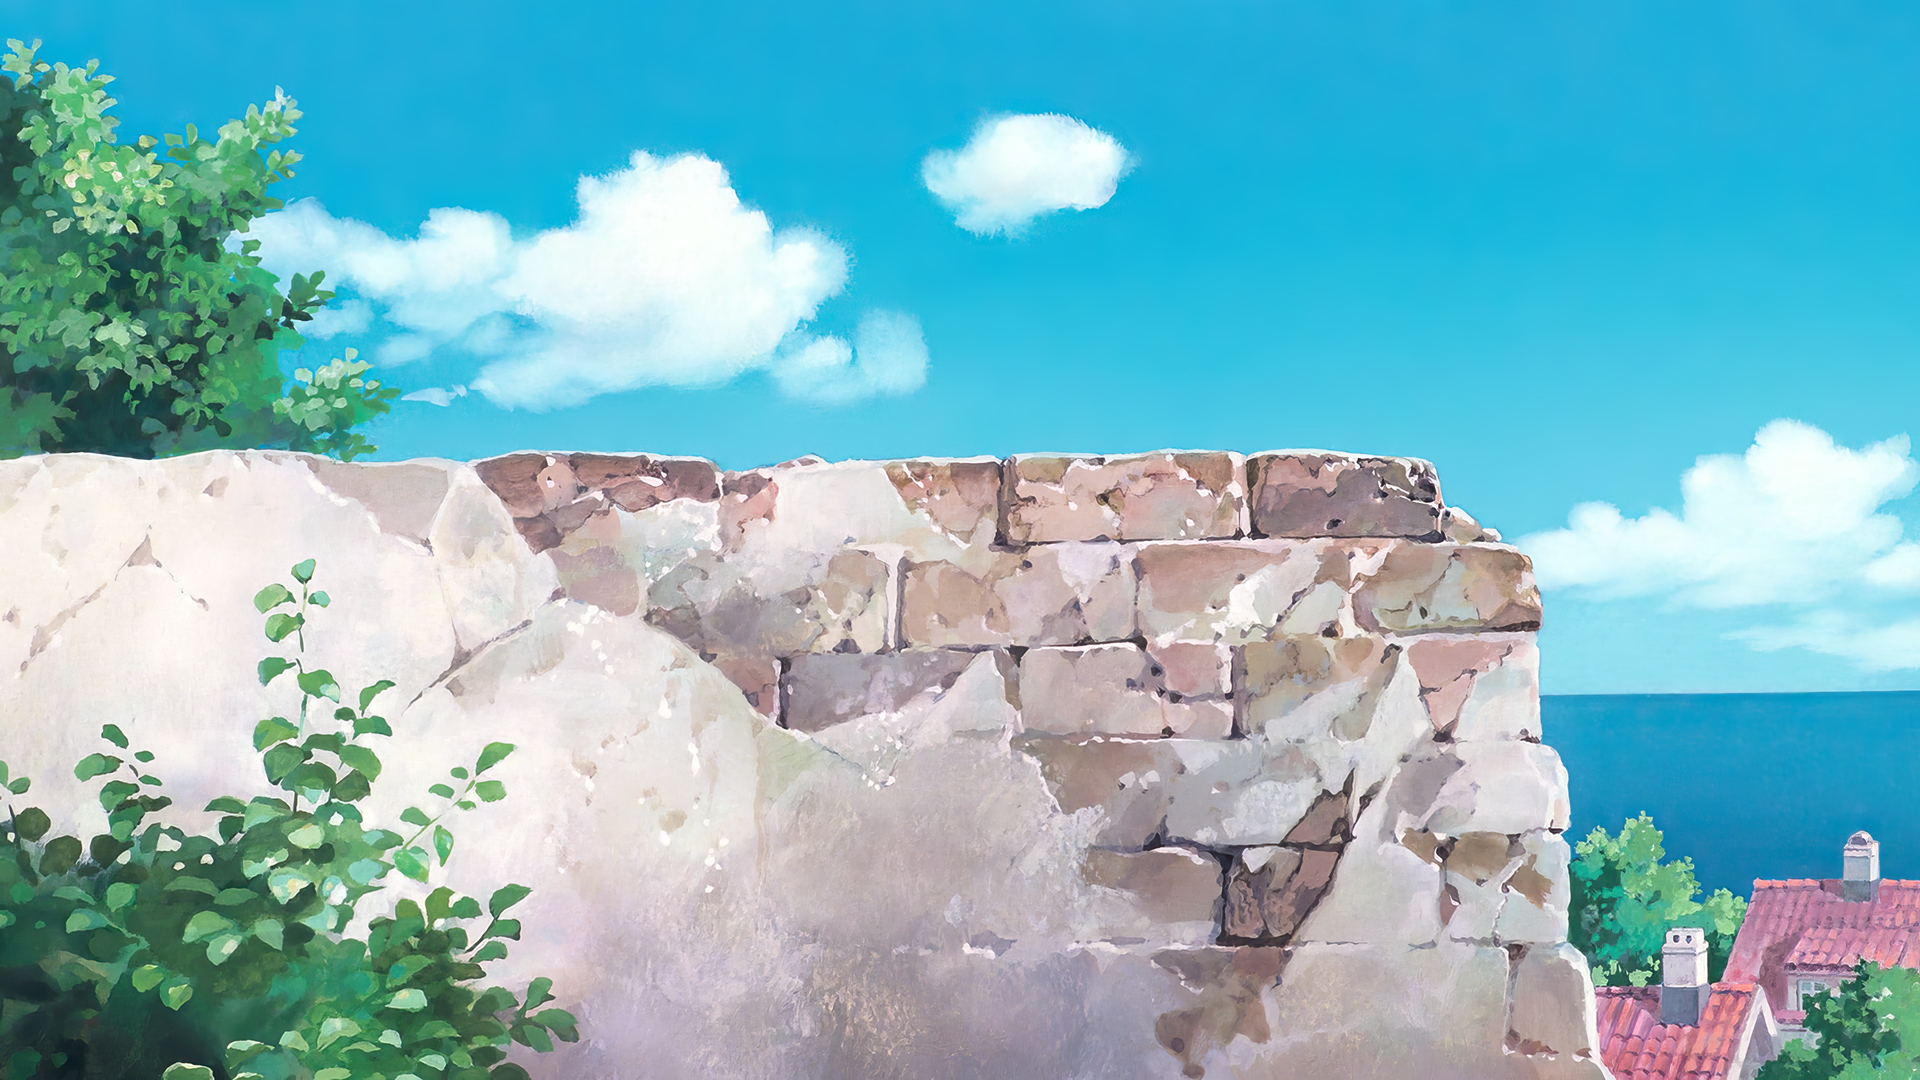 Anime 1920x1080 Kiki's Delivery Service animated movies anime animation film stills Studio Ghibli Hayao Miyazaki sky clouds wall plants sea water house leaves